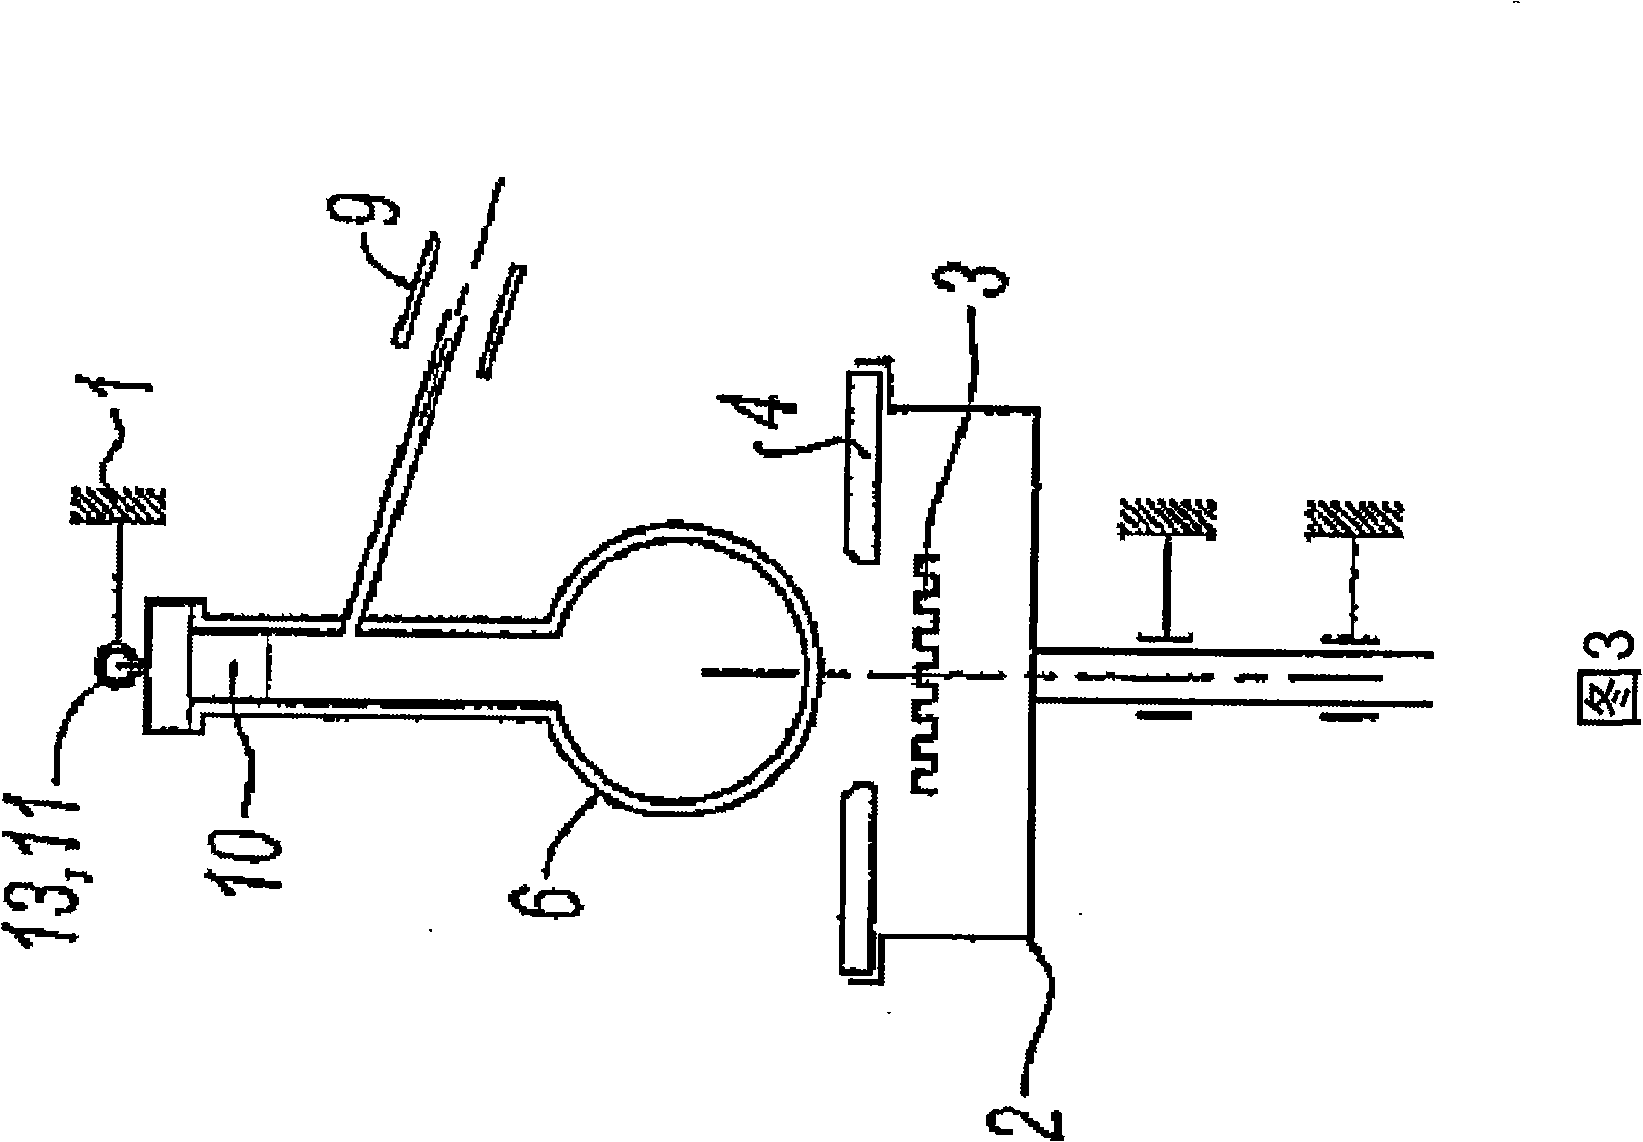 Distilling device suitable for globular distillation flask